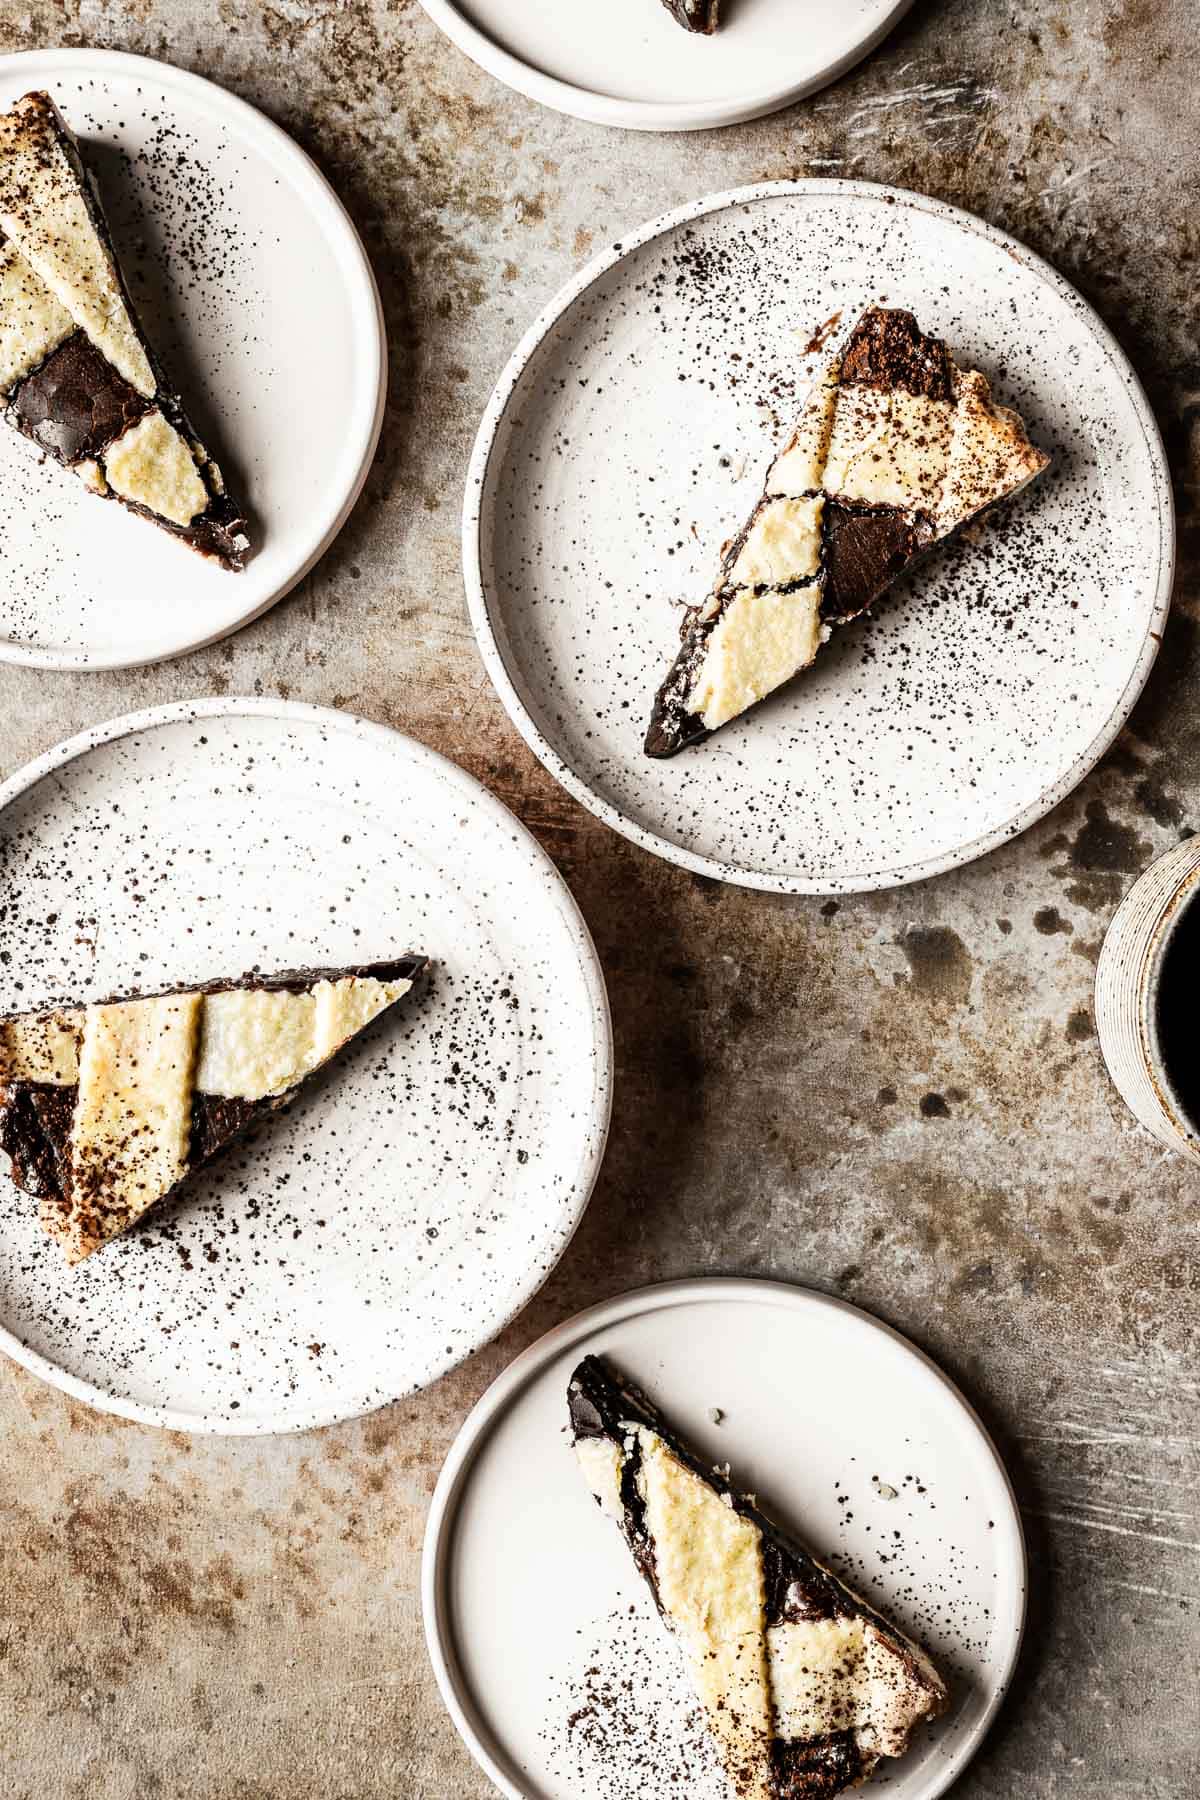 Slices of nutella tart on white plates.